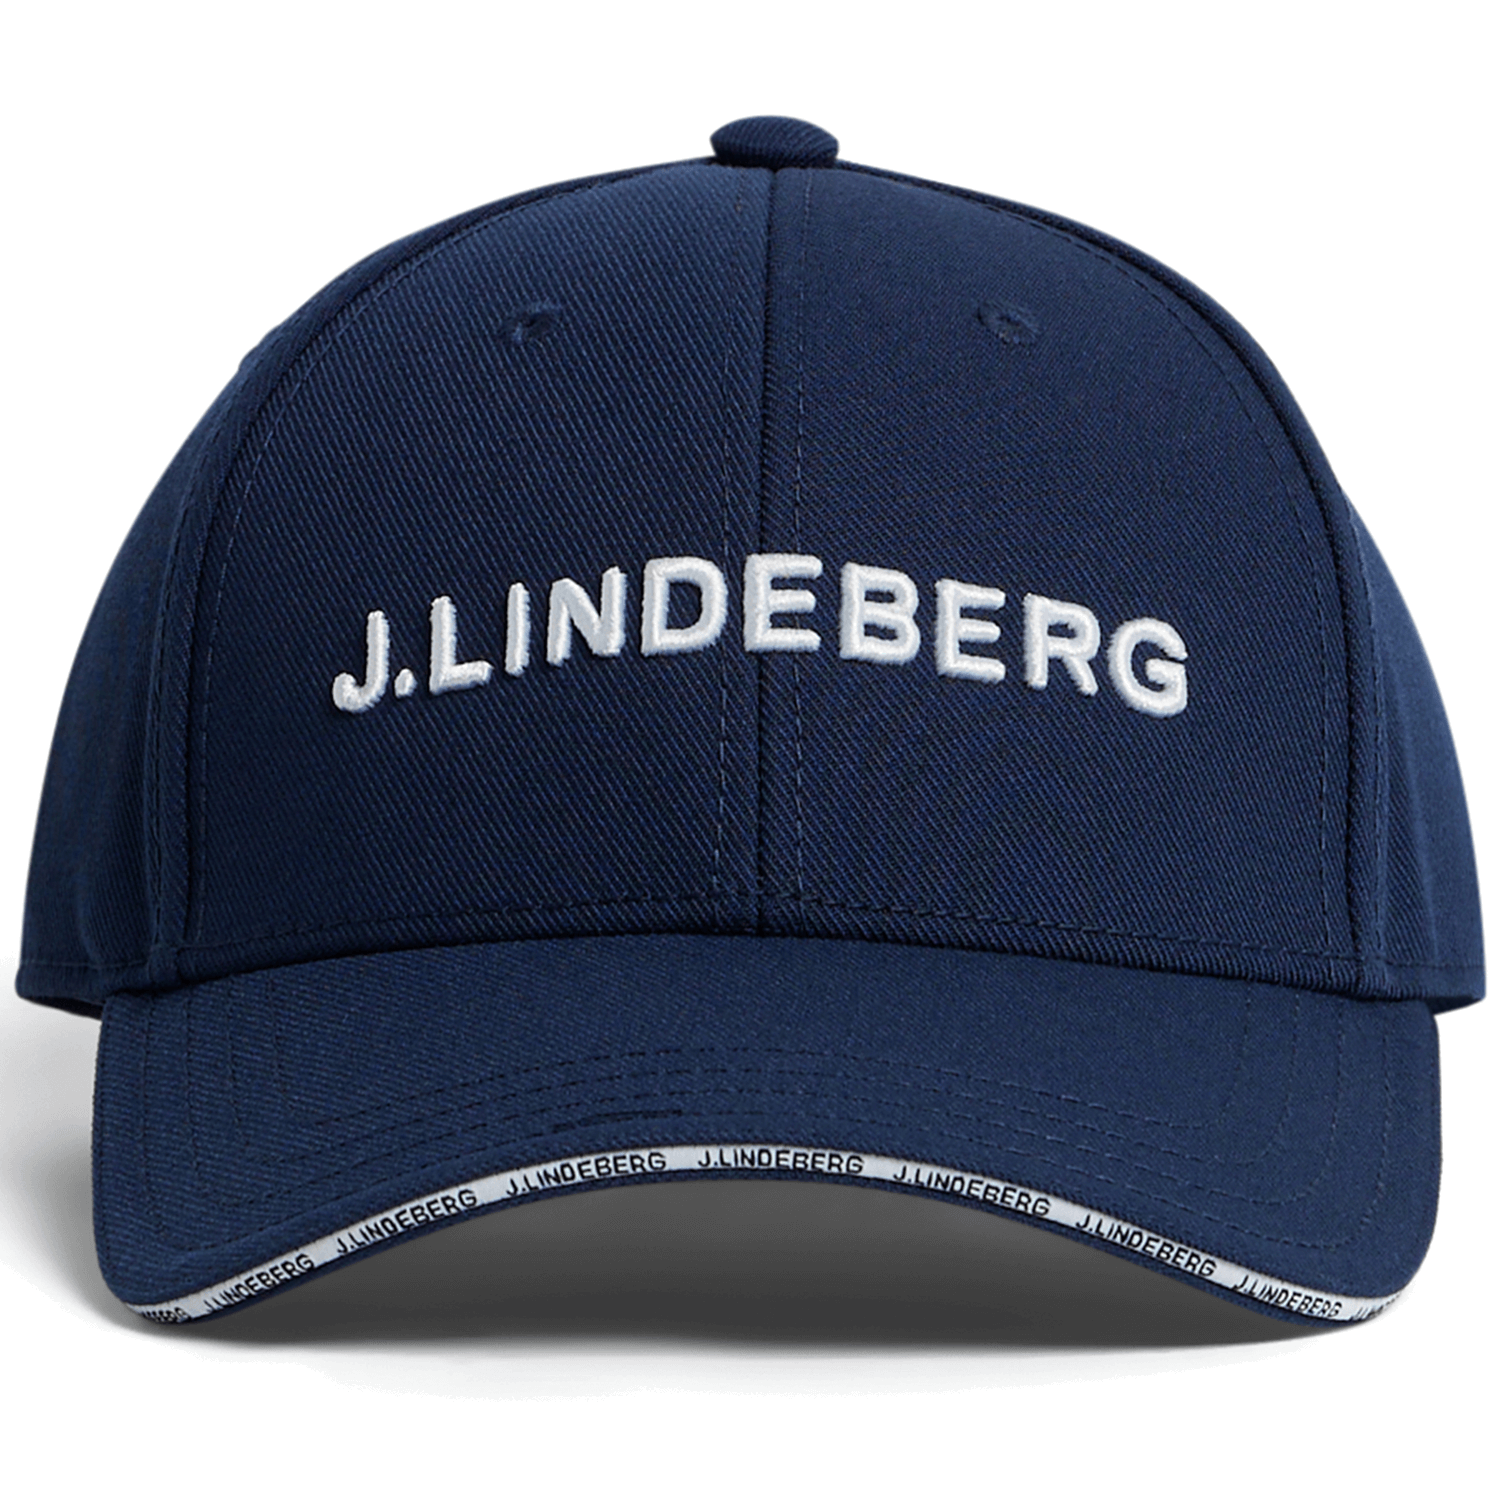 J Lindeberg Hennric Baseball Cap